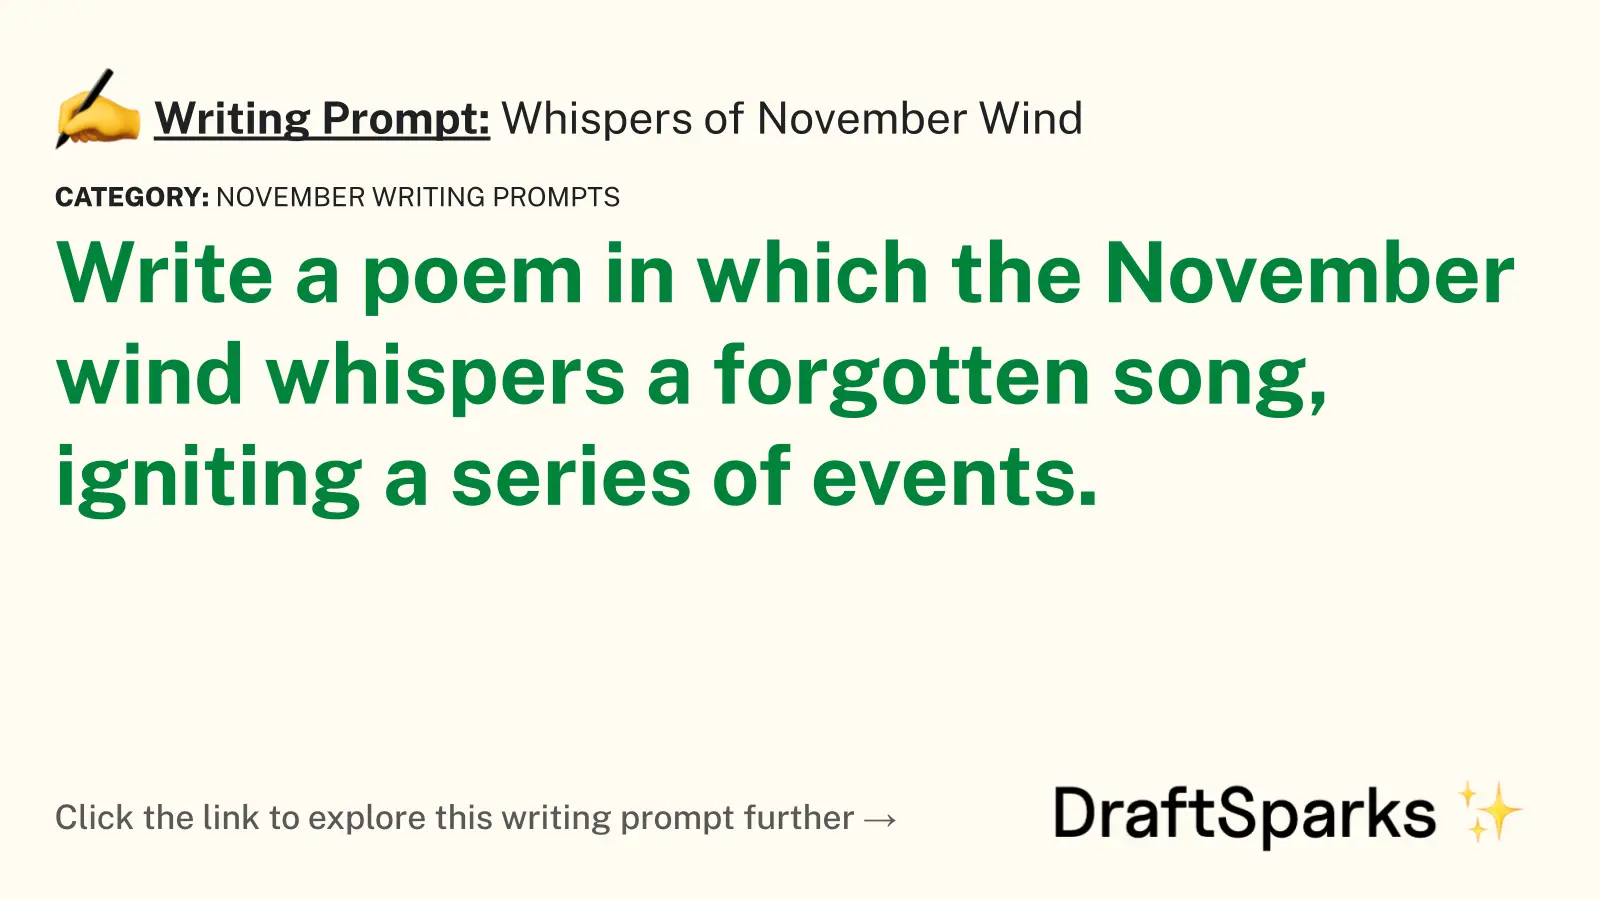 Whispers of November Wind